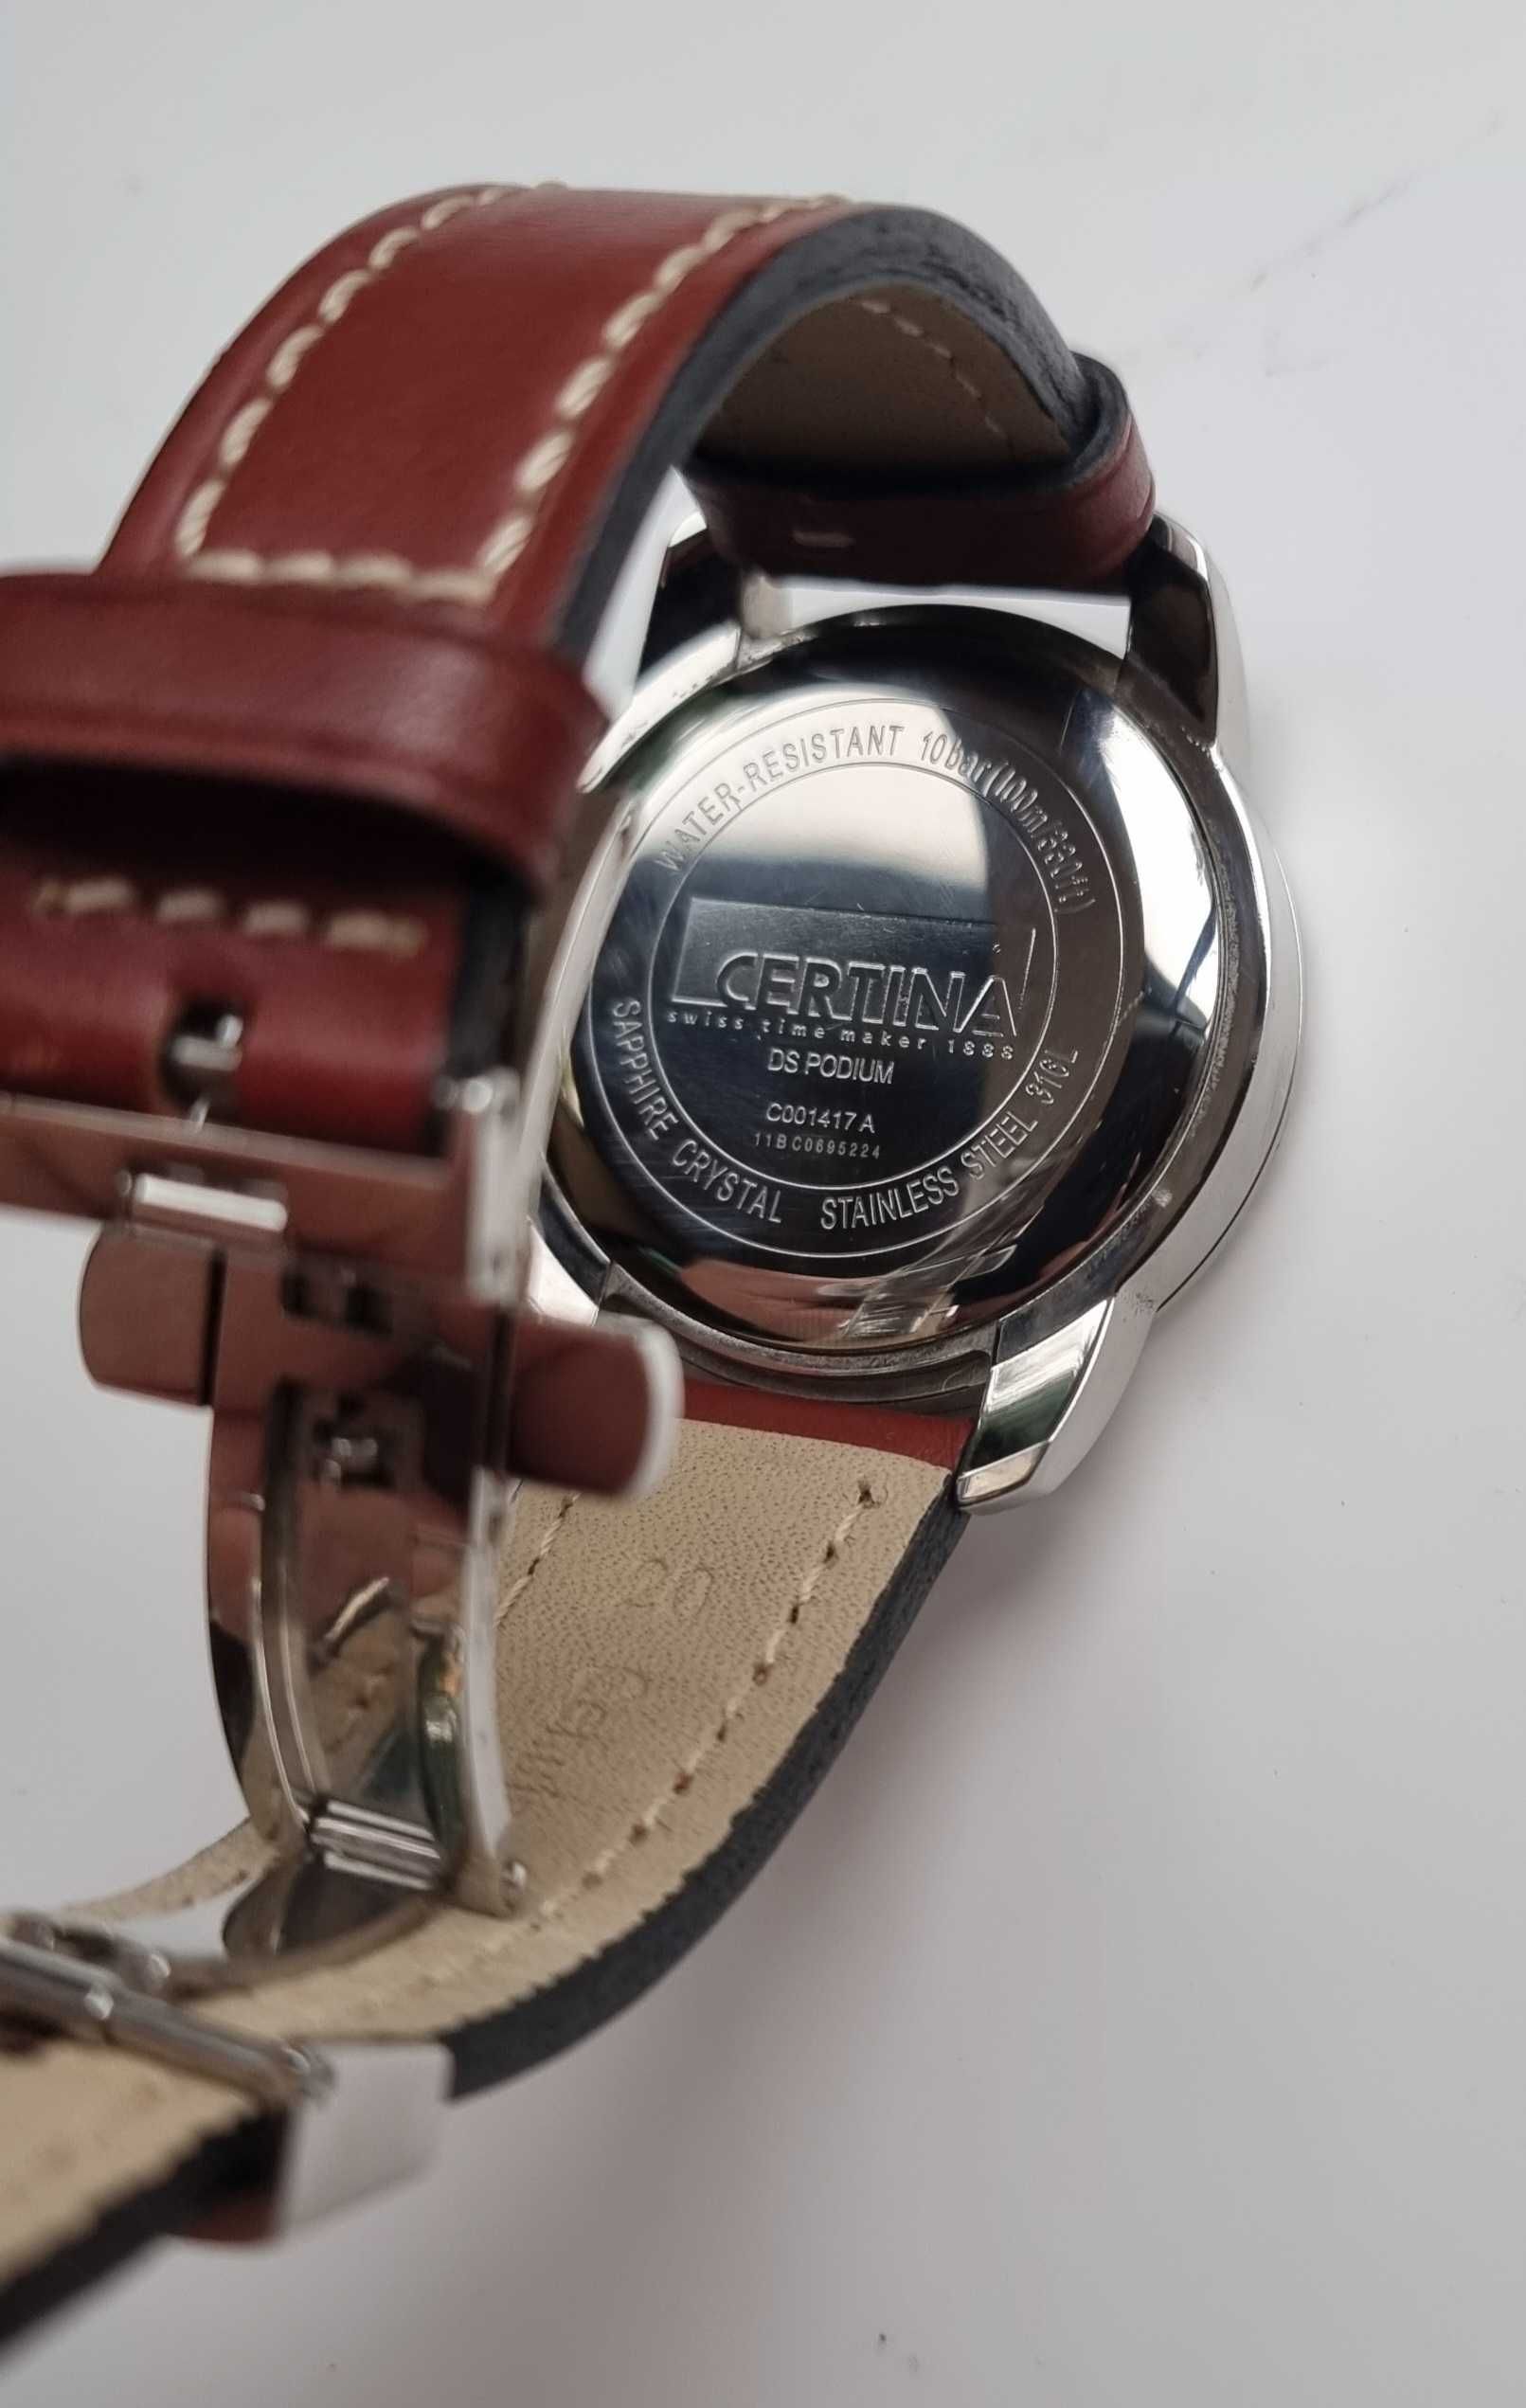 часы Certina DS Podium C001417A Sapphire